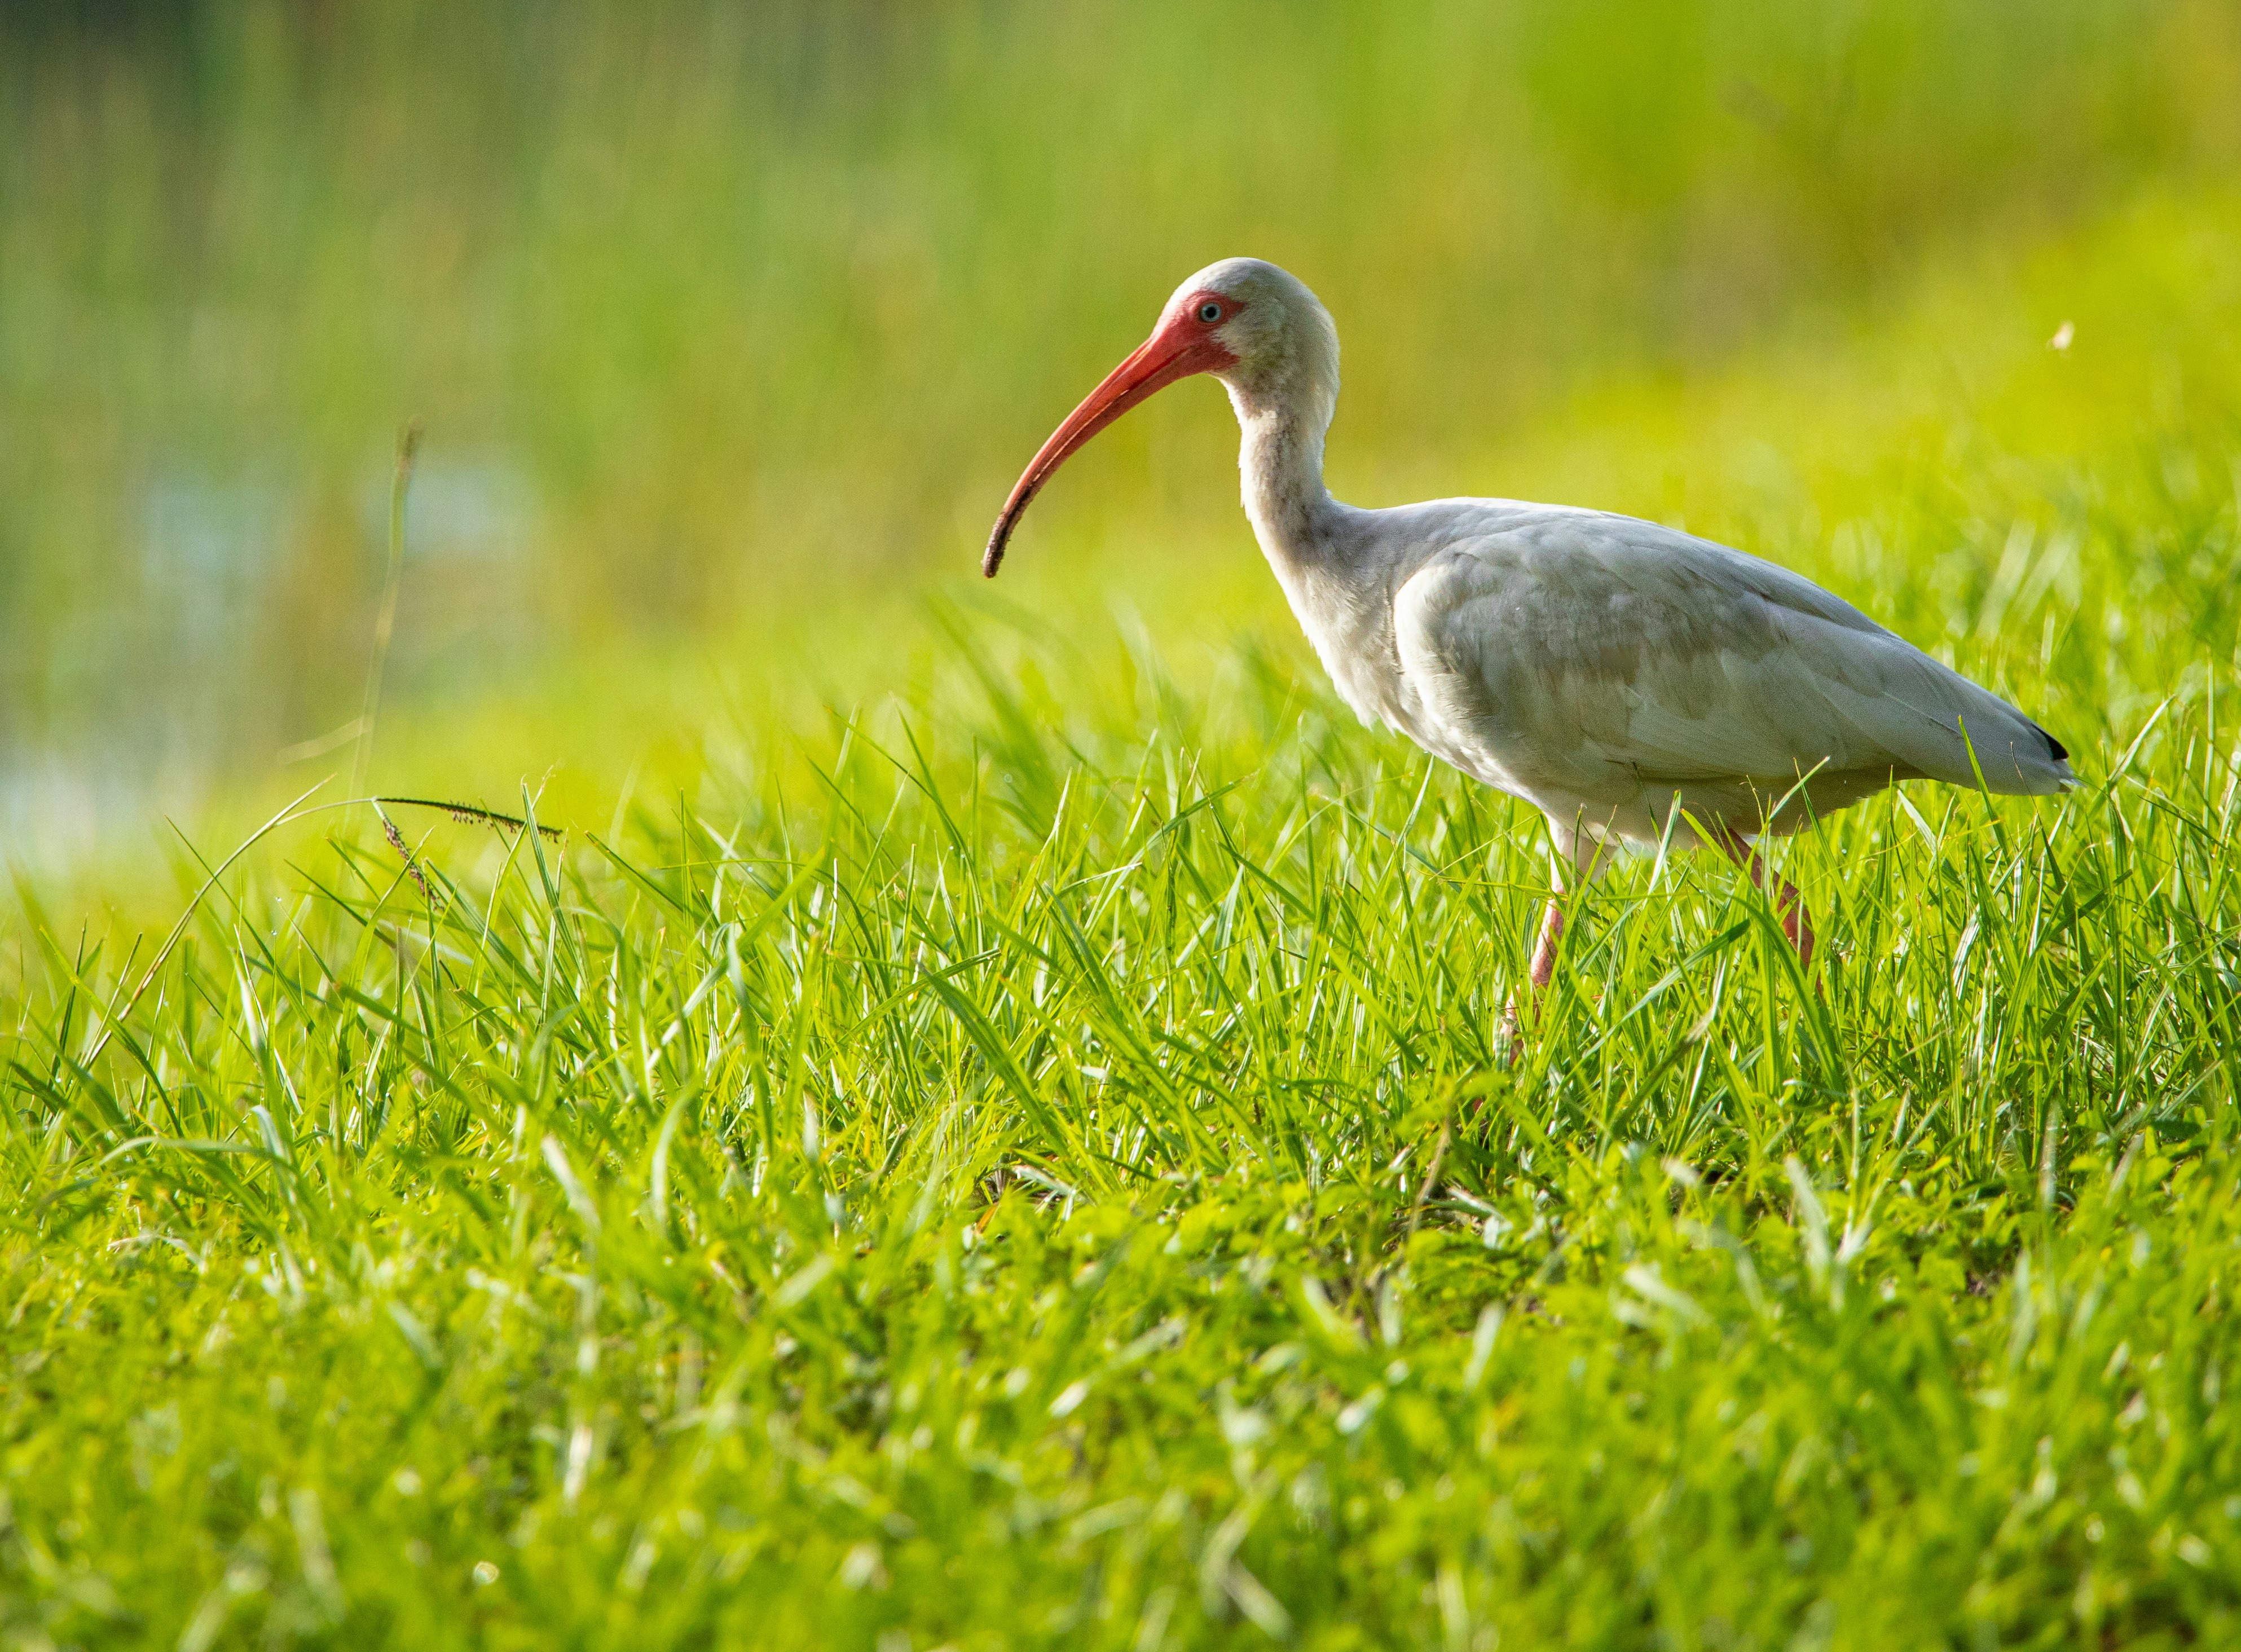 gray stork on green grass field during daytime